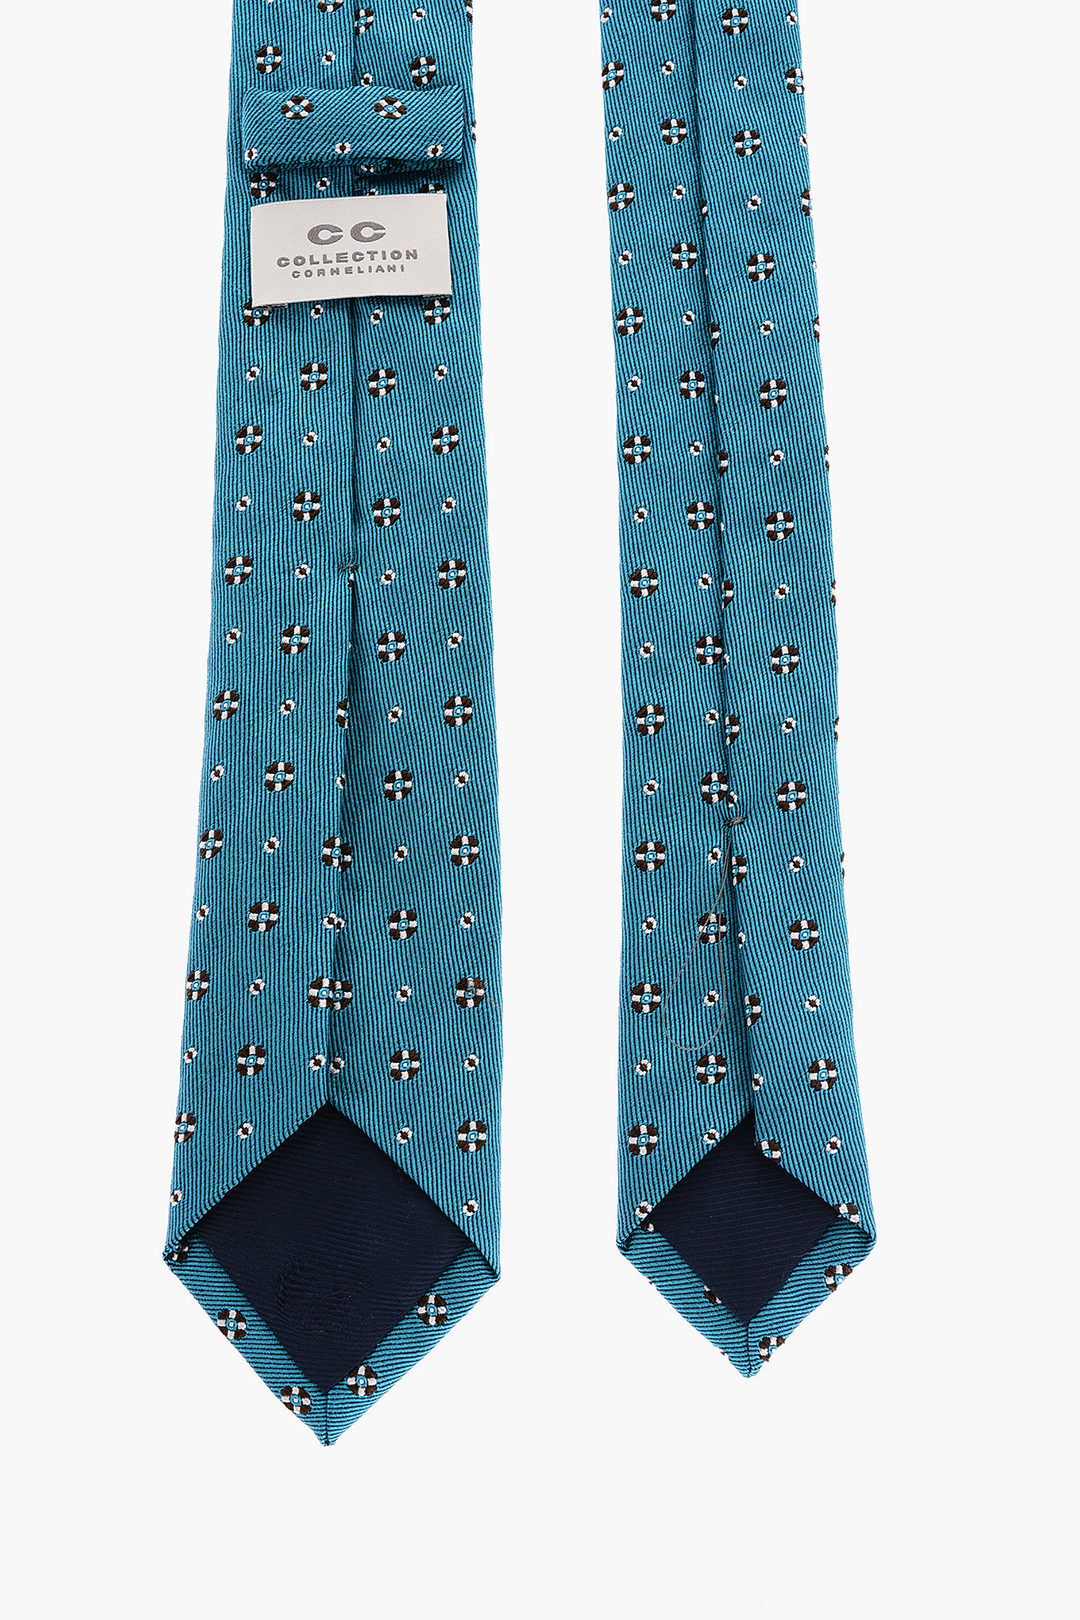 Corneliani CC COLLECTION Patterned Kipper Tie men - Glamood Outlet